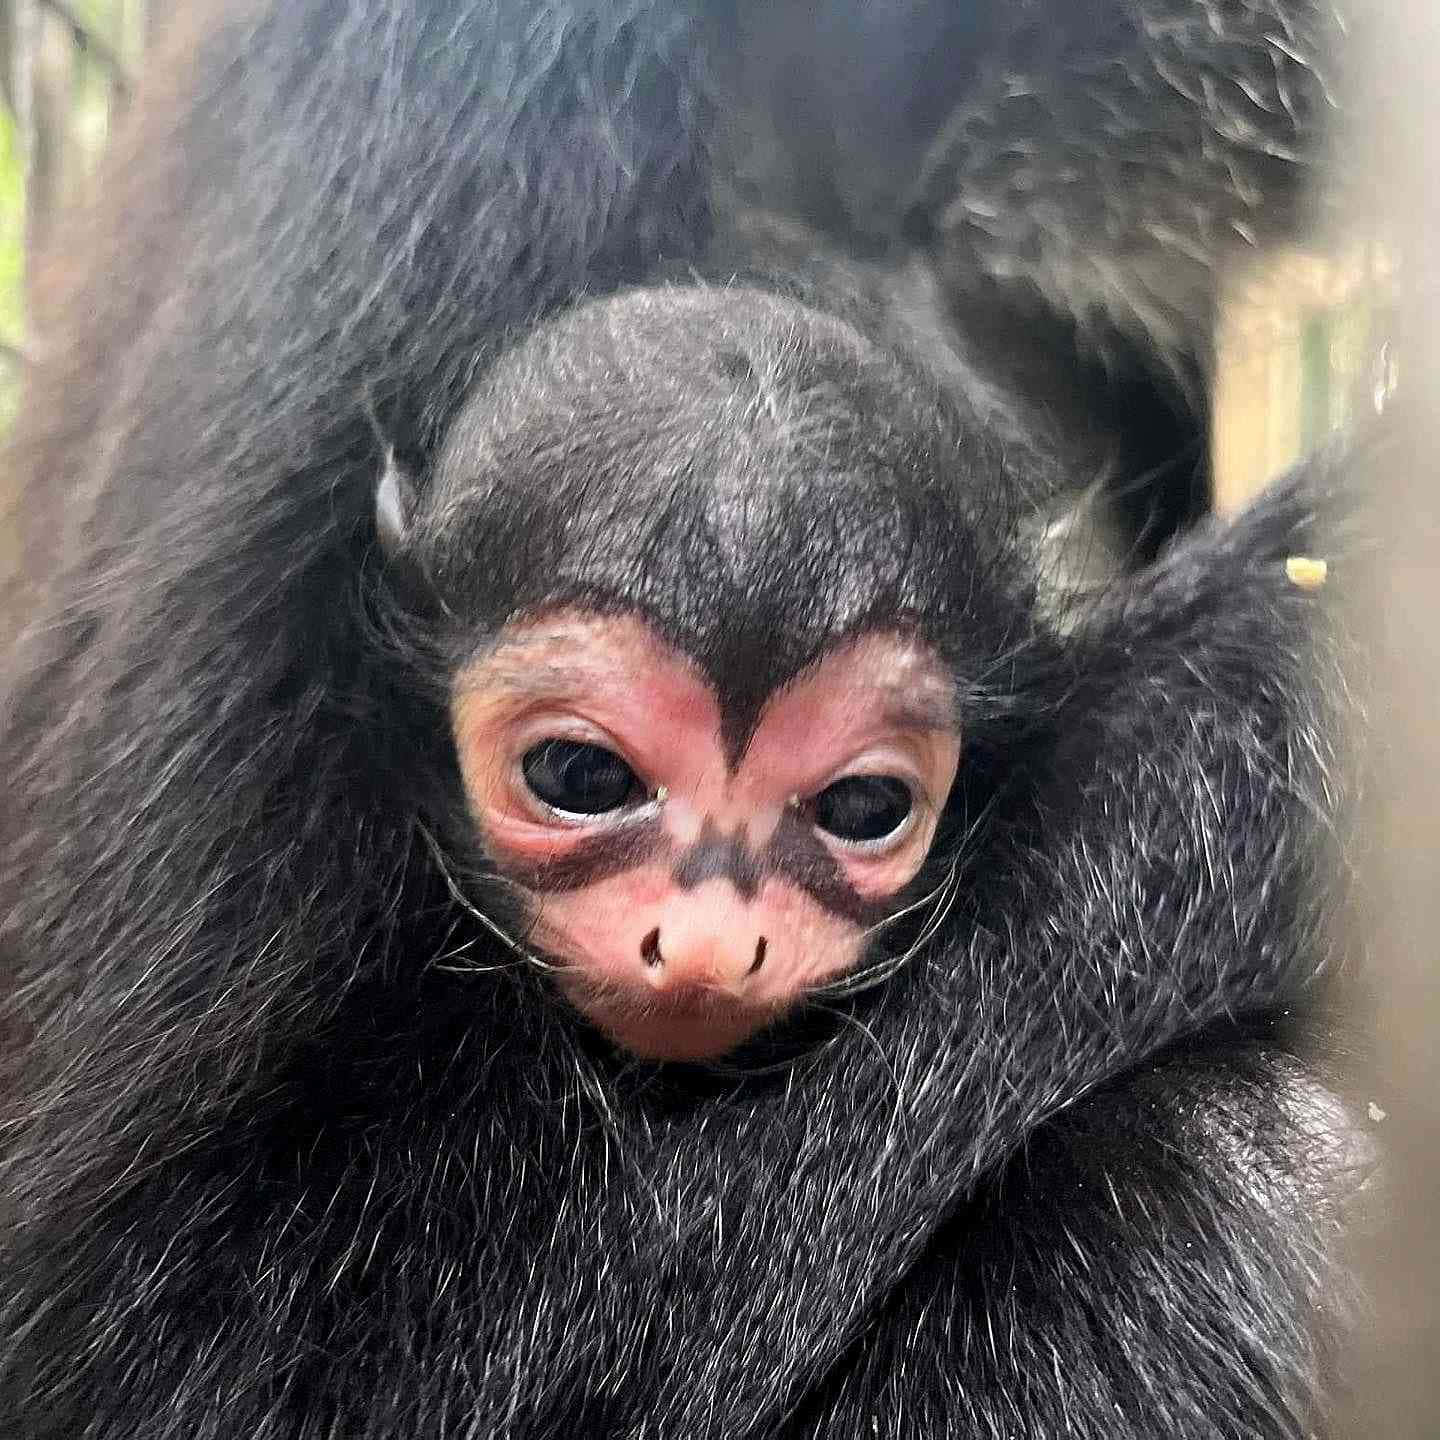 Cute Baby Monkey Gazing Playfully